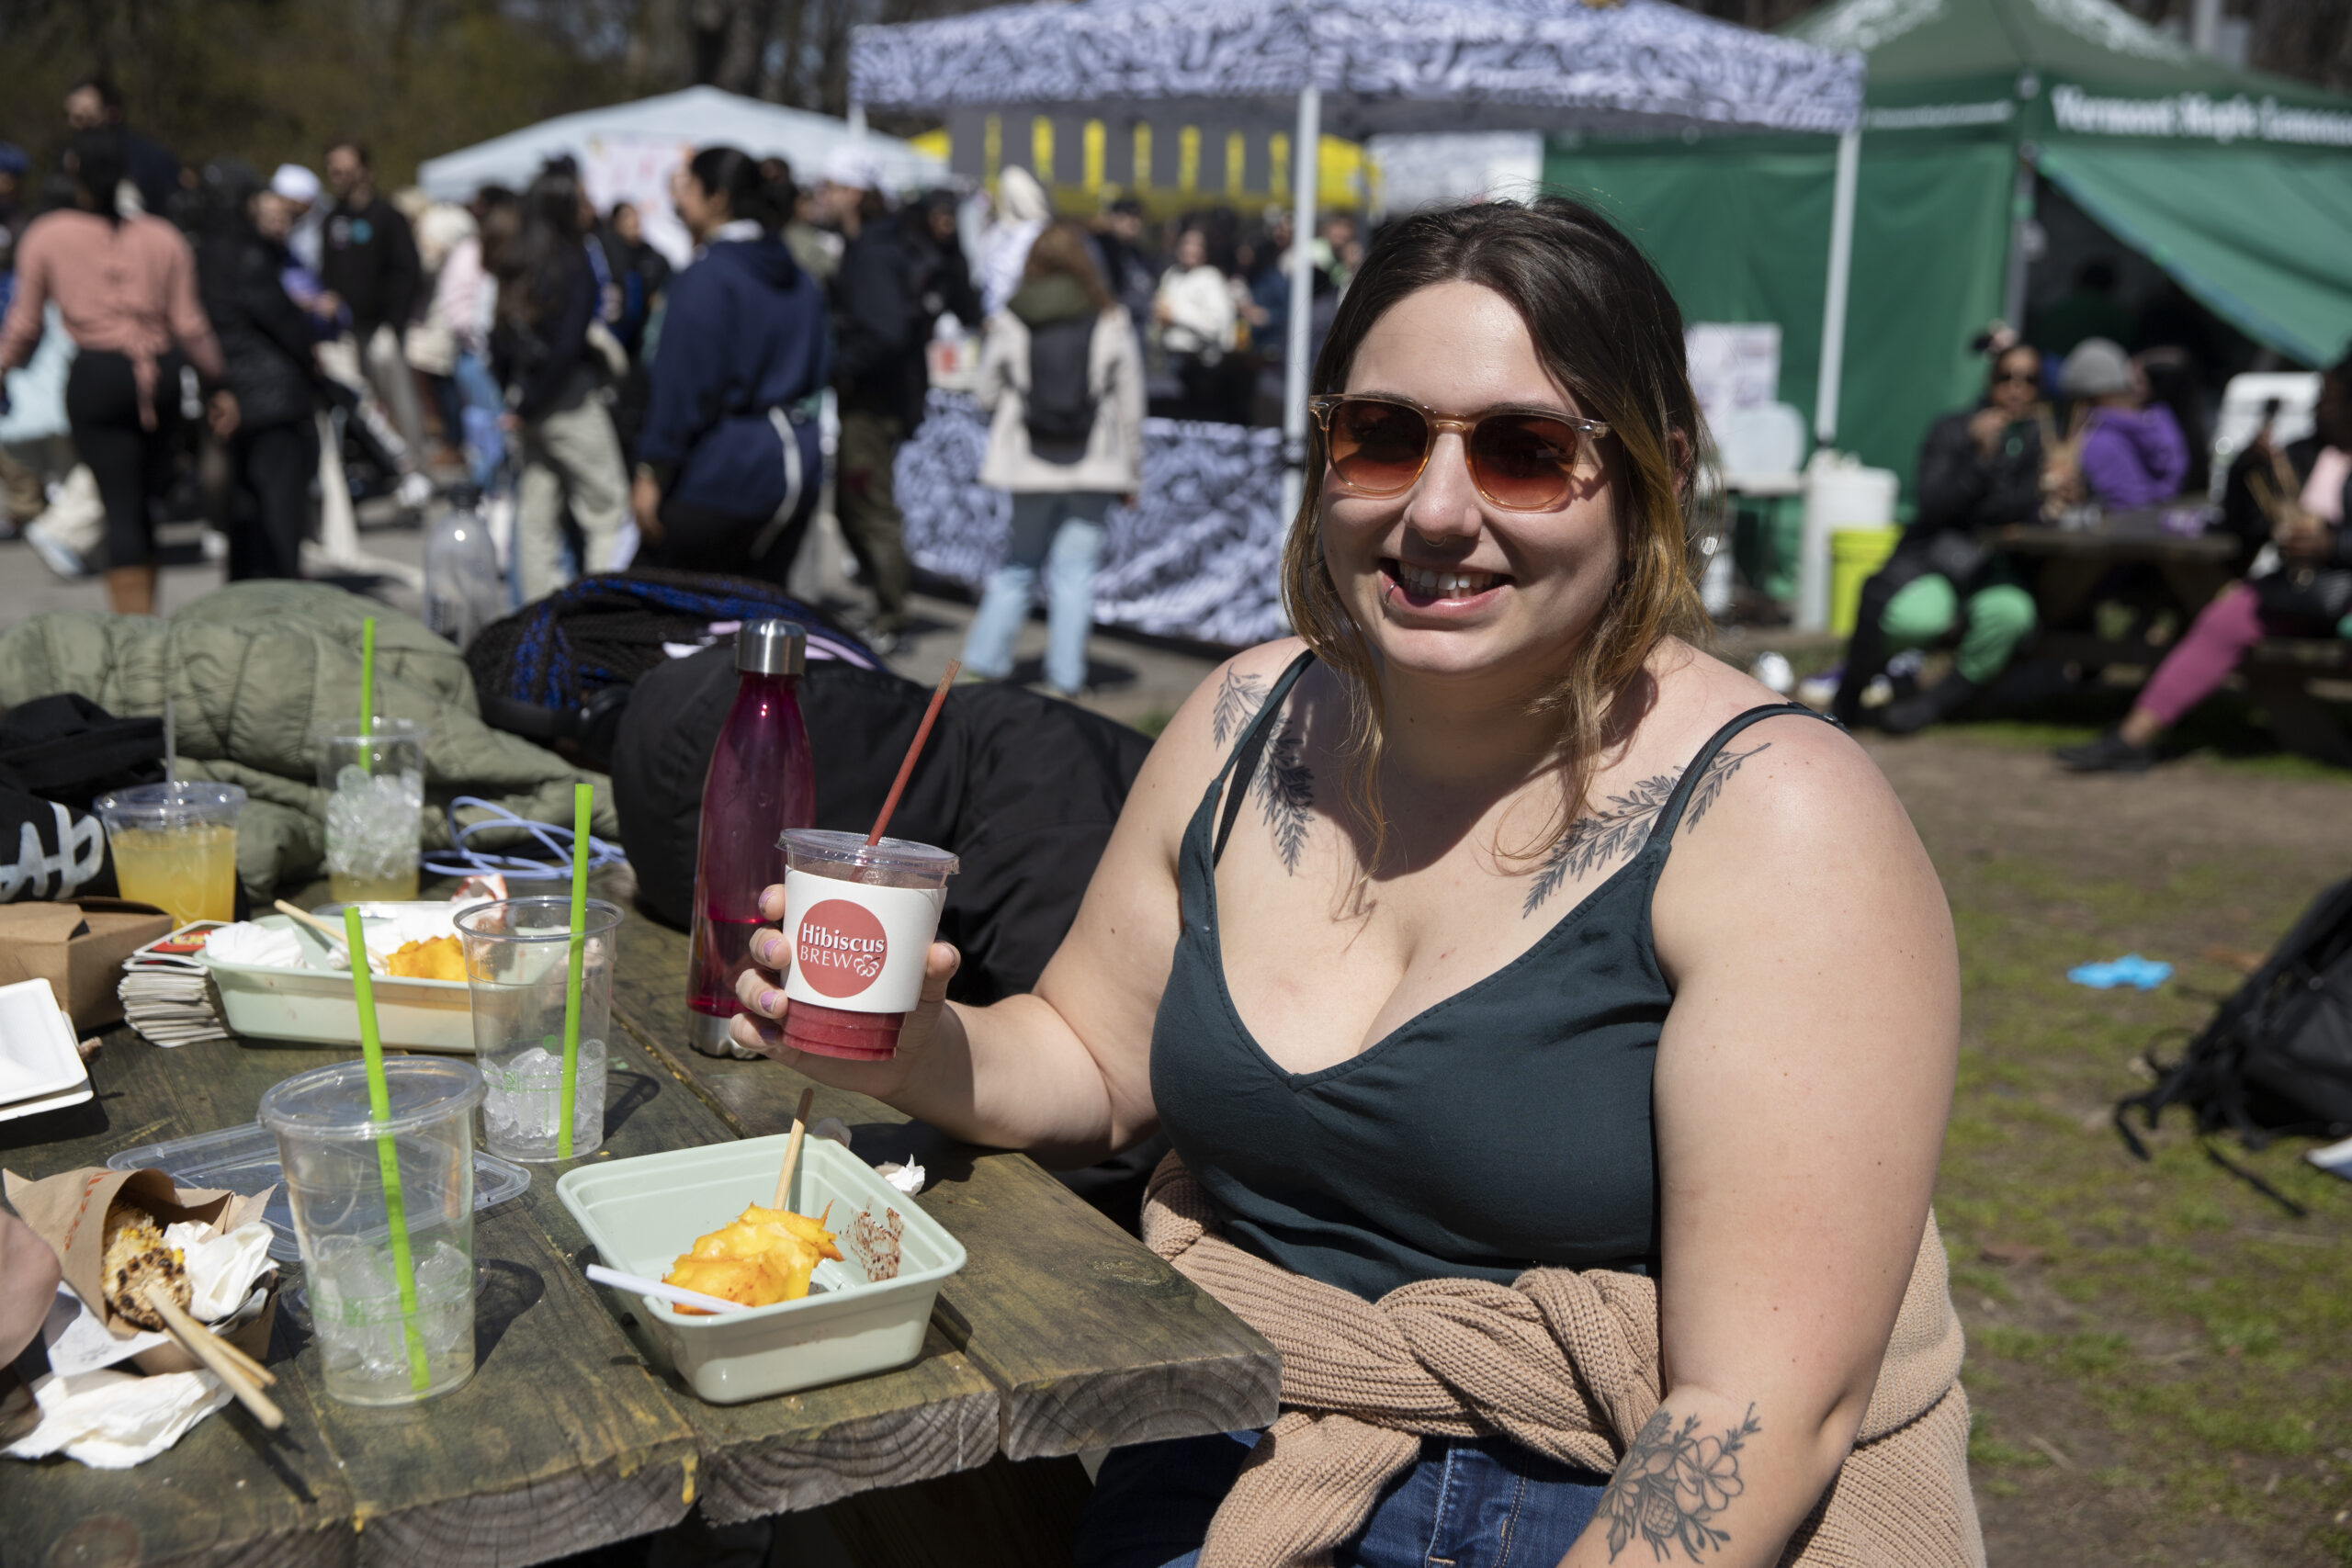 Maggie Benton Enjoys some food and some sun at Prospect Park Smorgasburg.